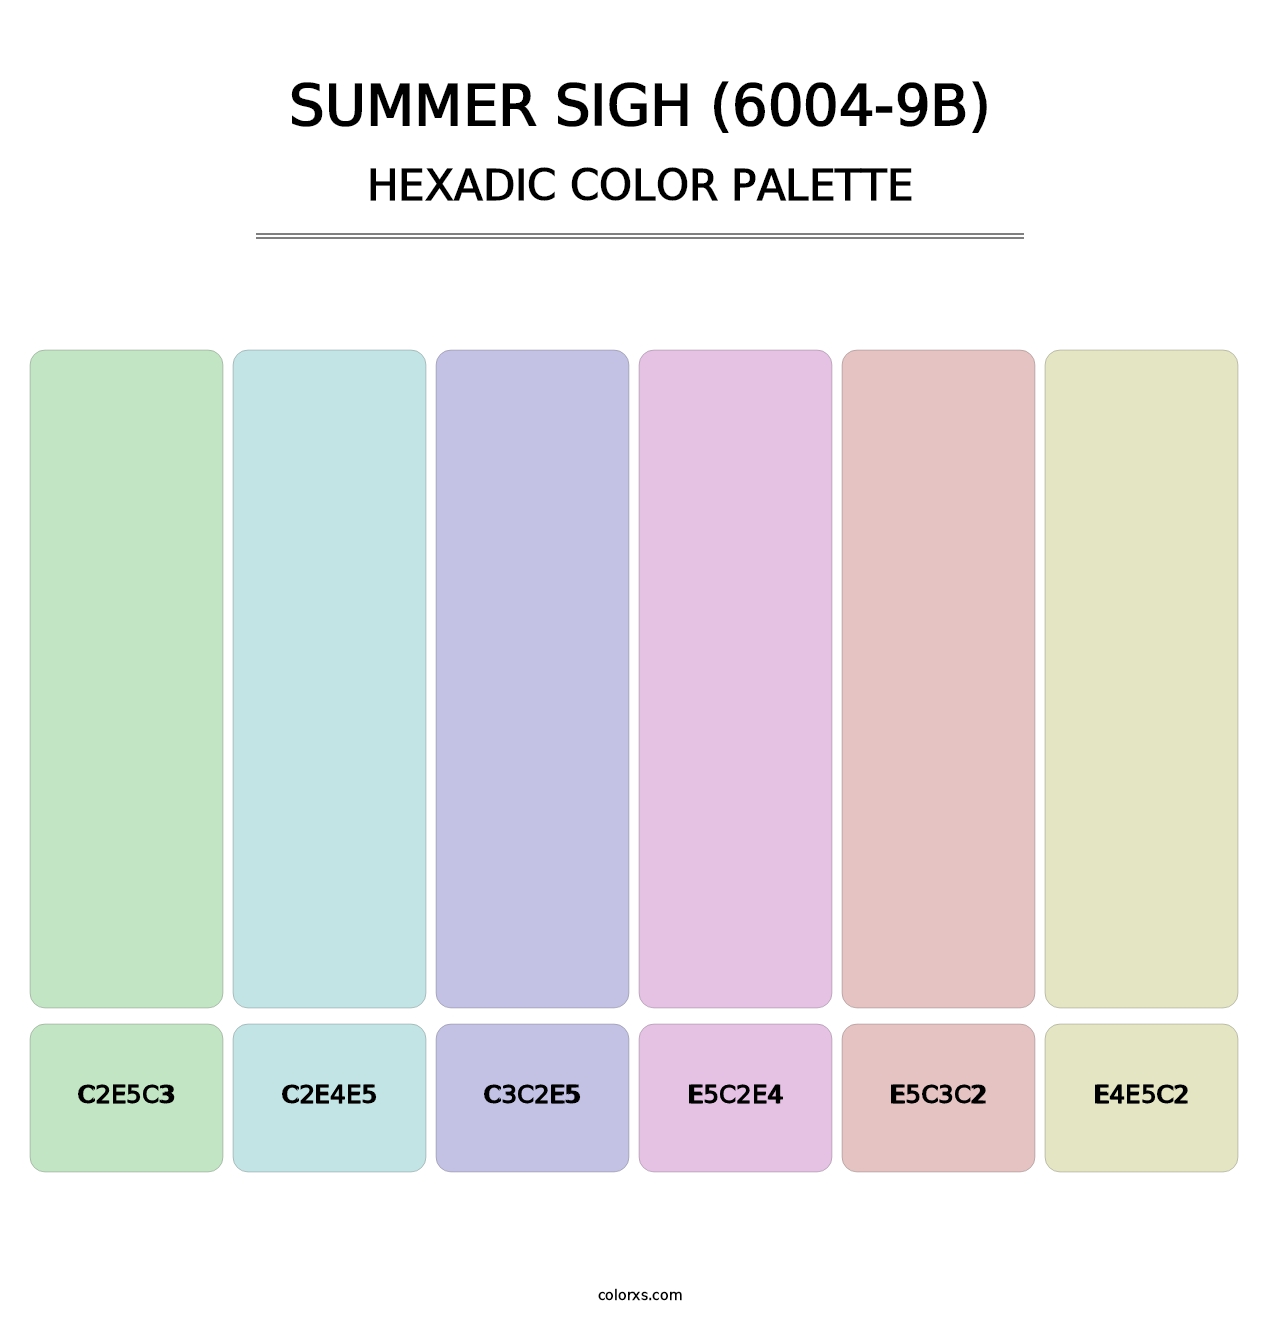 Summer Sigh (6004-9B) - Hexadic Color Palette